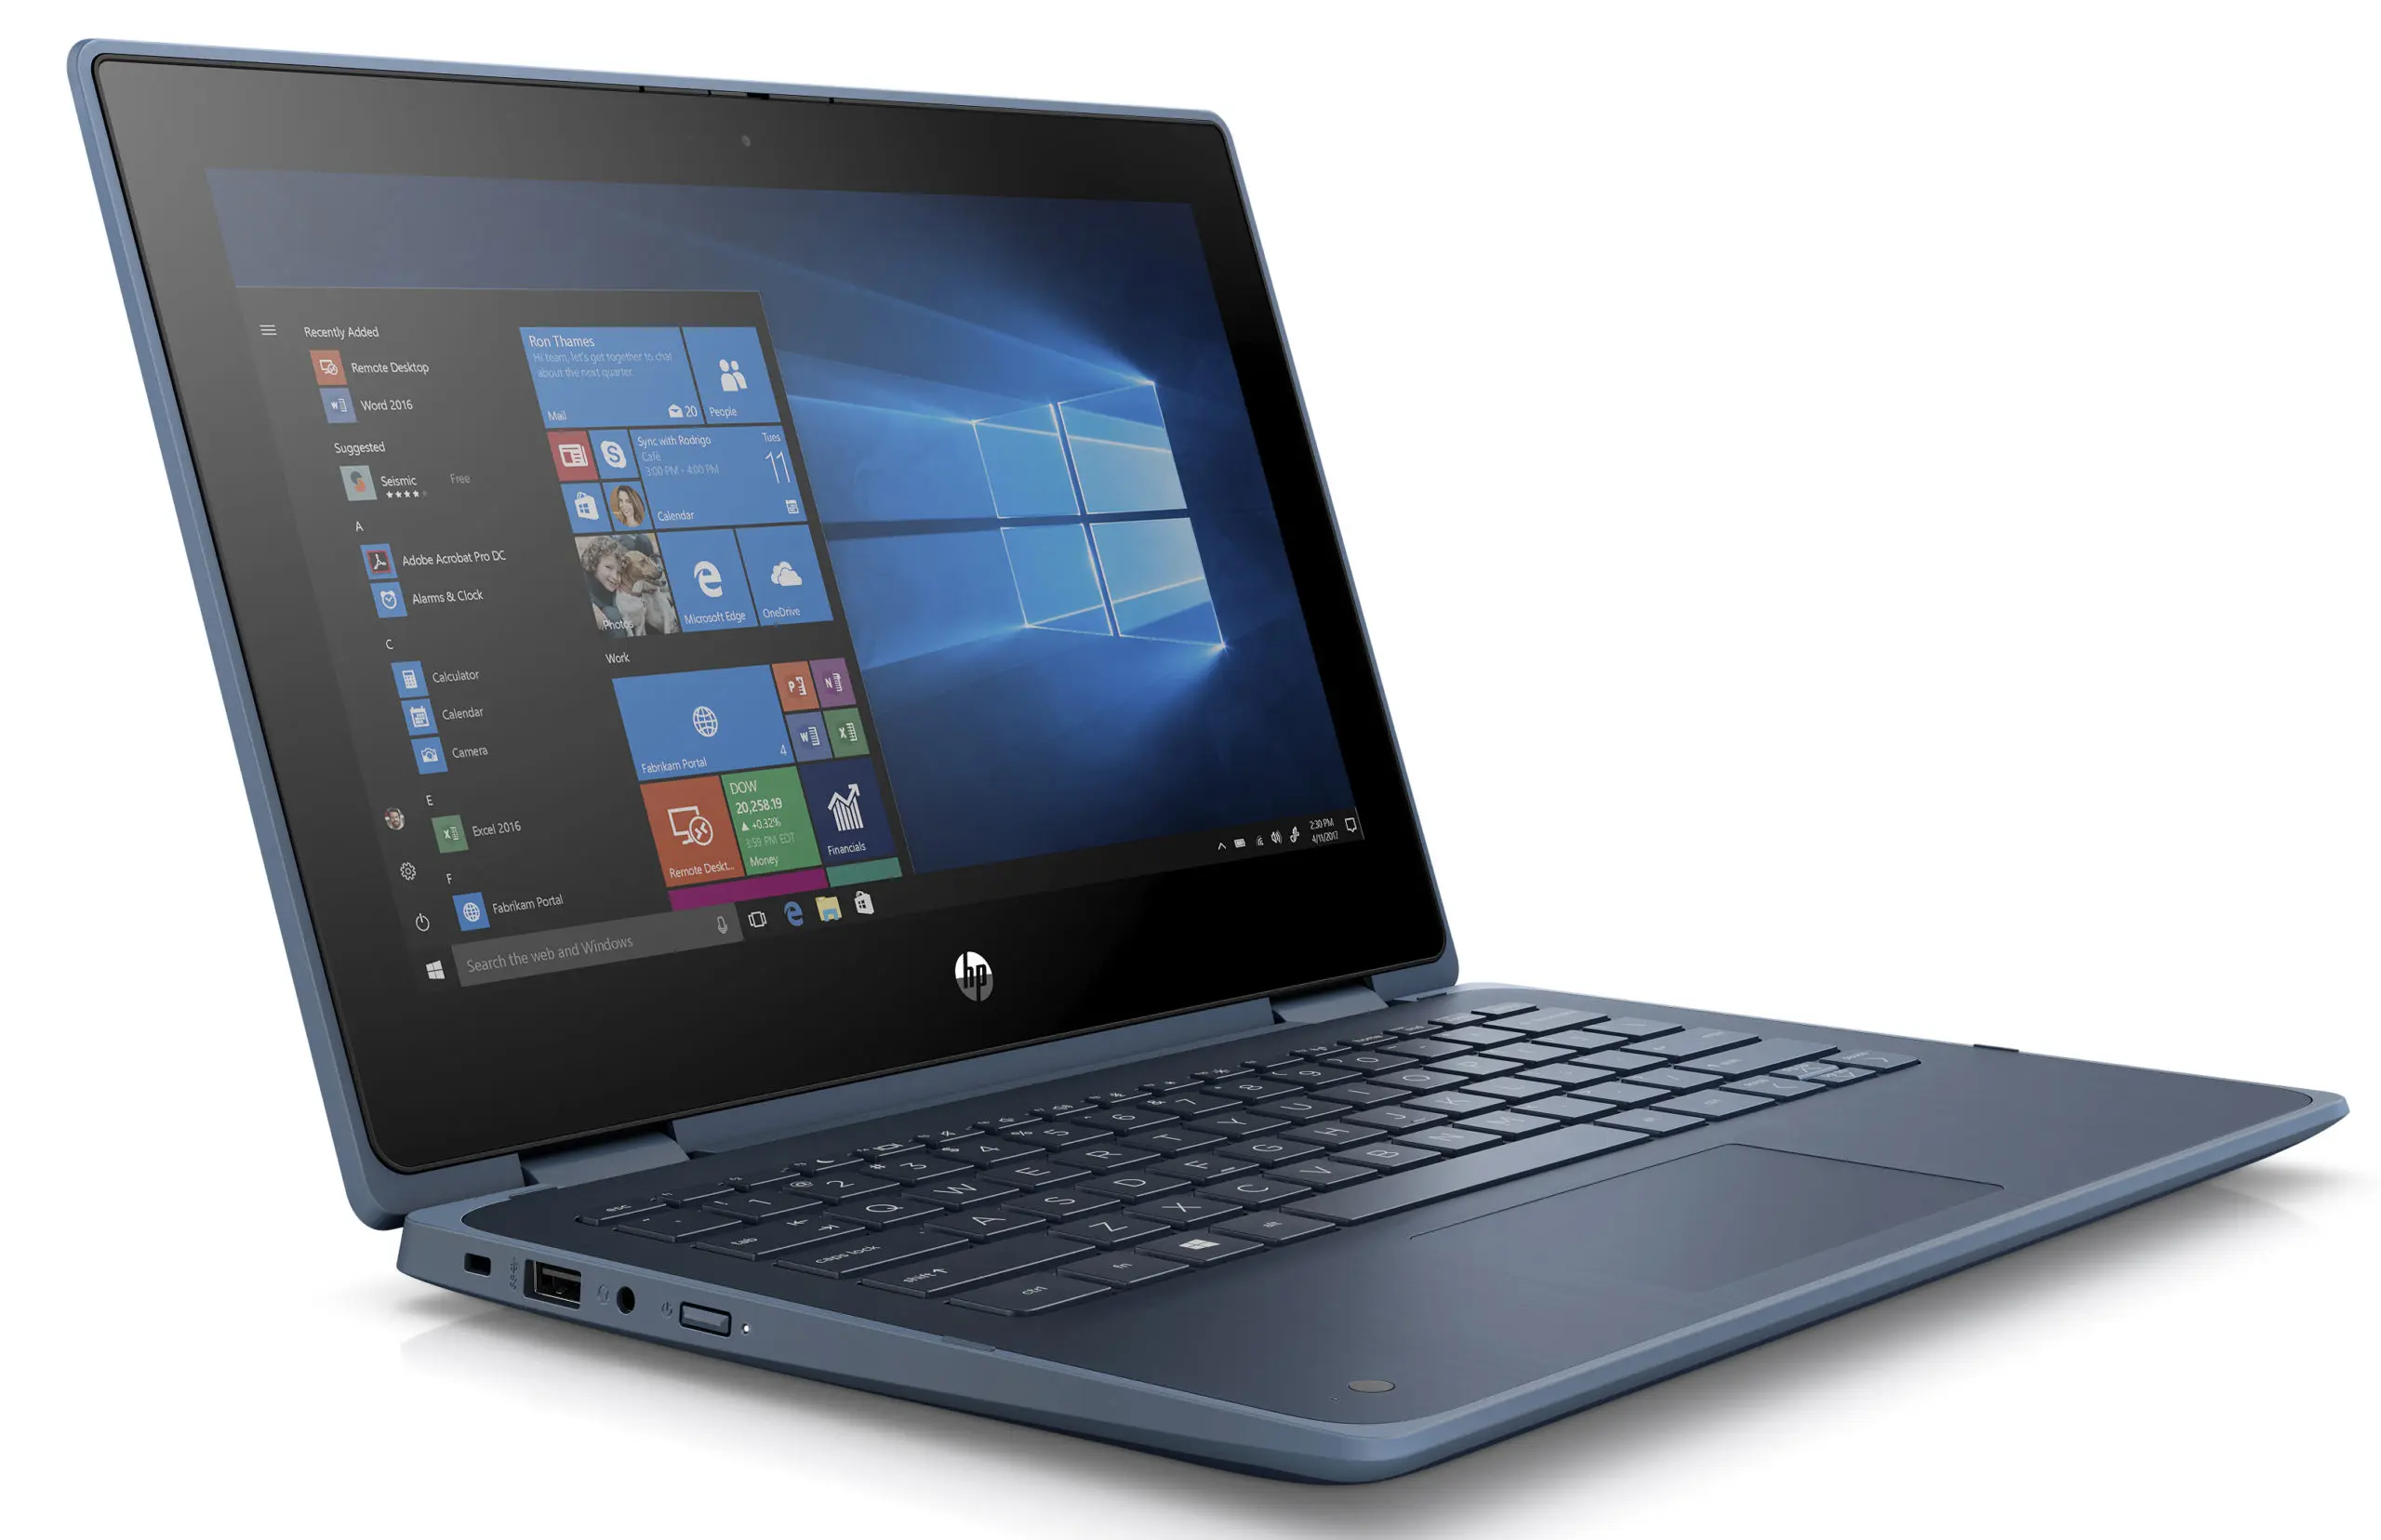 hewlett packard laptop windows 10 - Do HP laptops have Windows 10